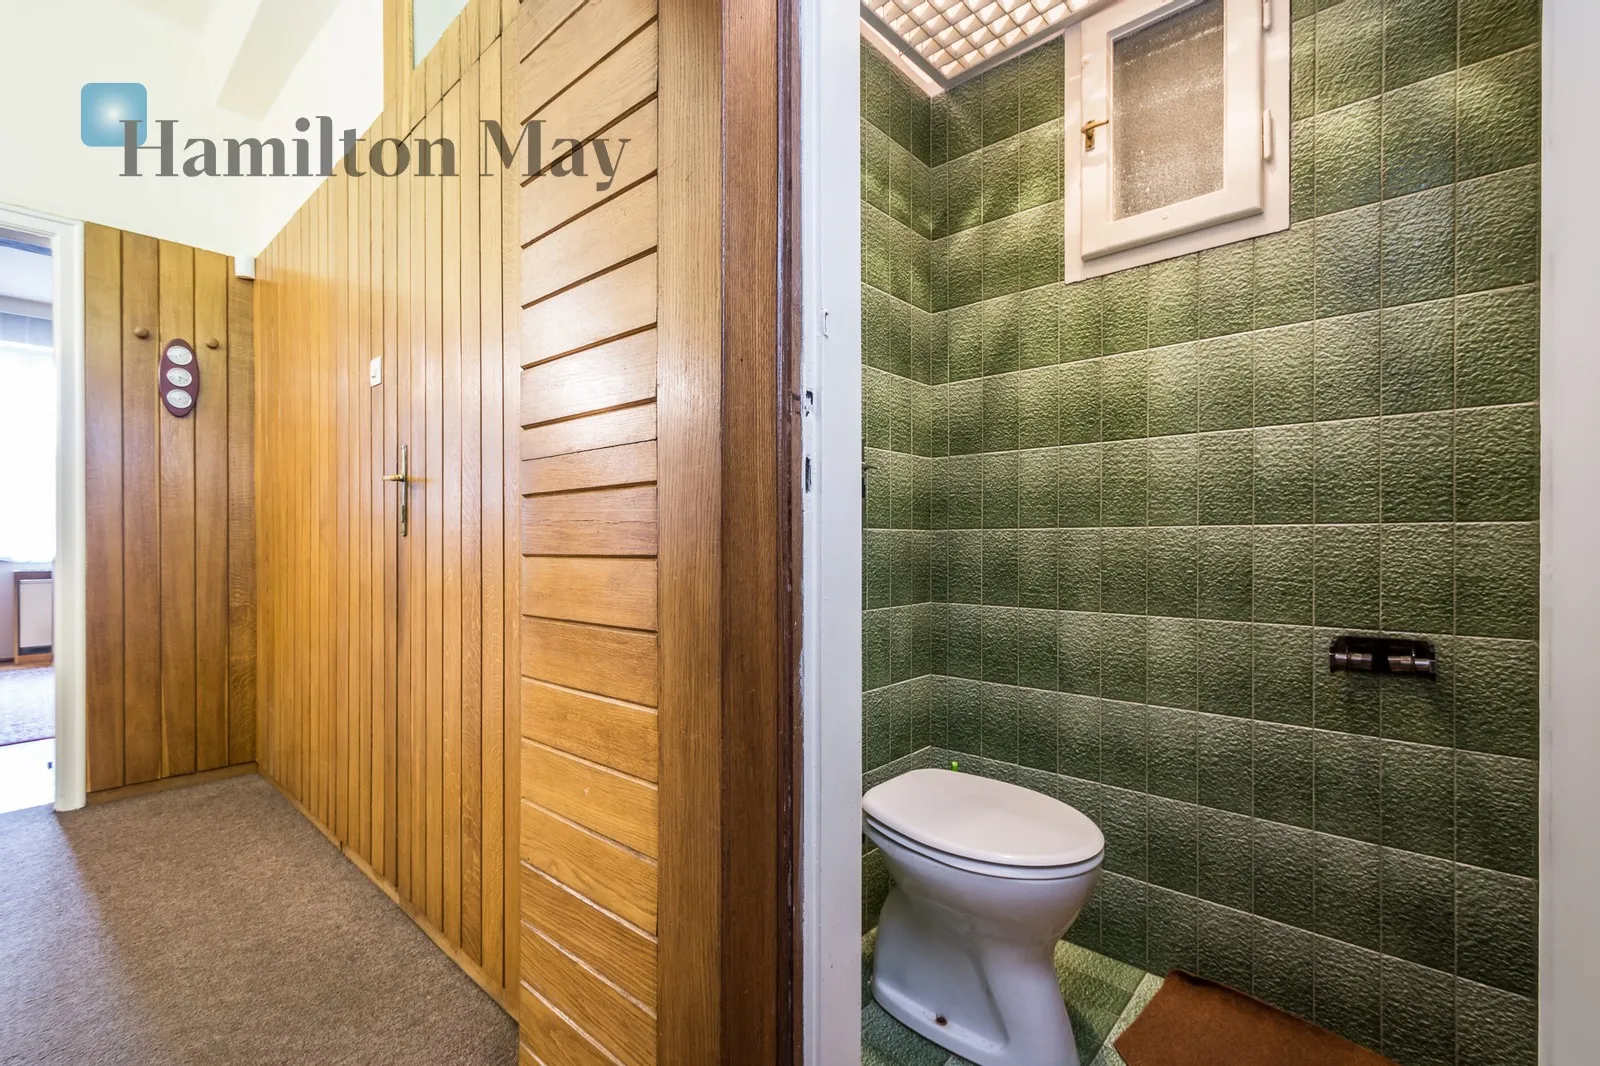 Price: 2950 PLN Bedrooms: 2 Bathrooms: 1 Size: 100m2